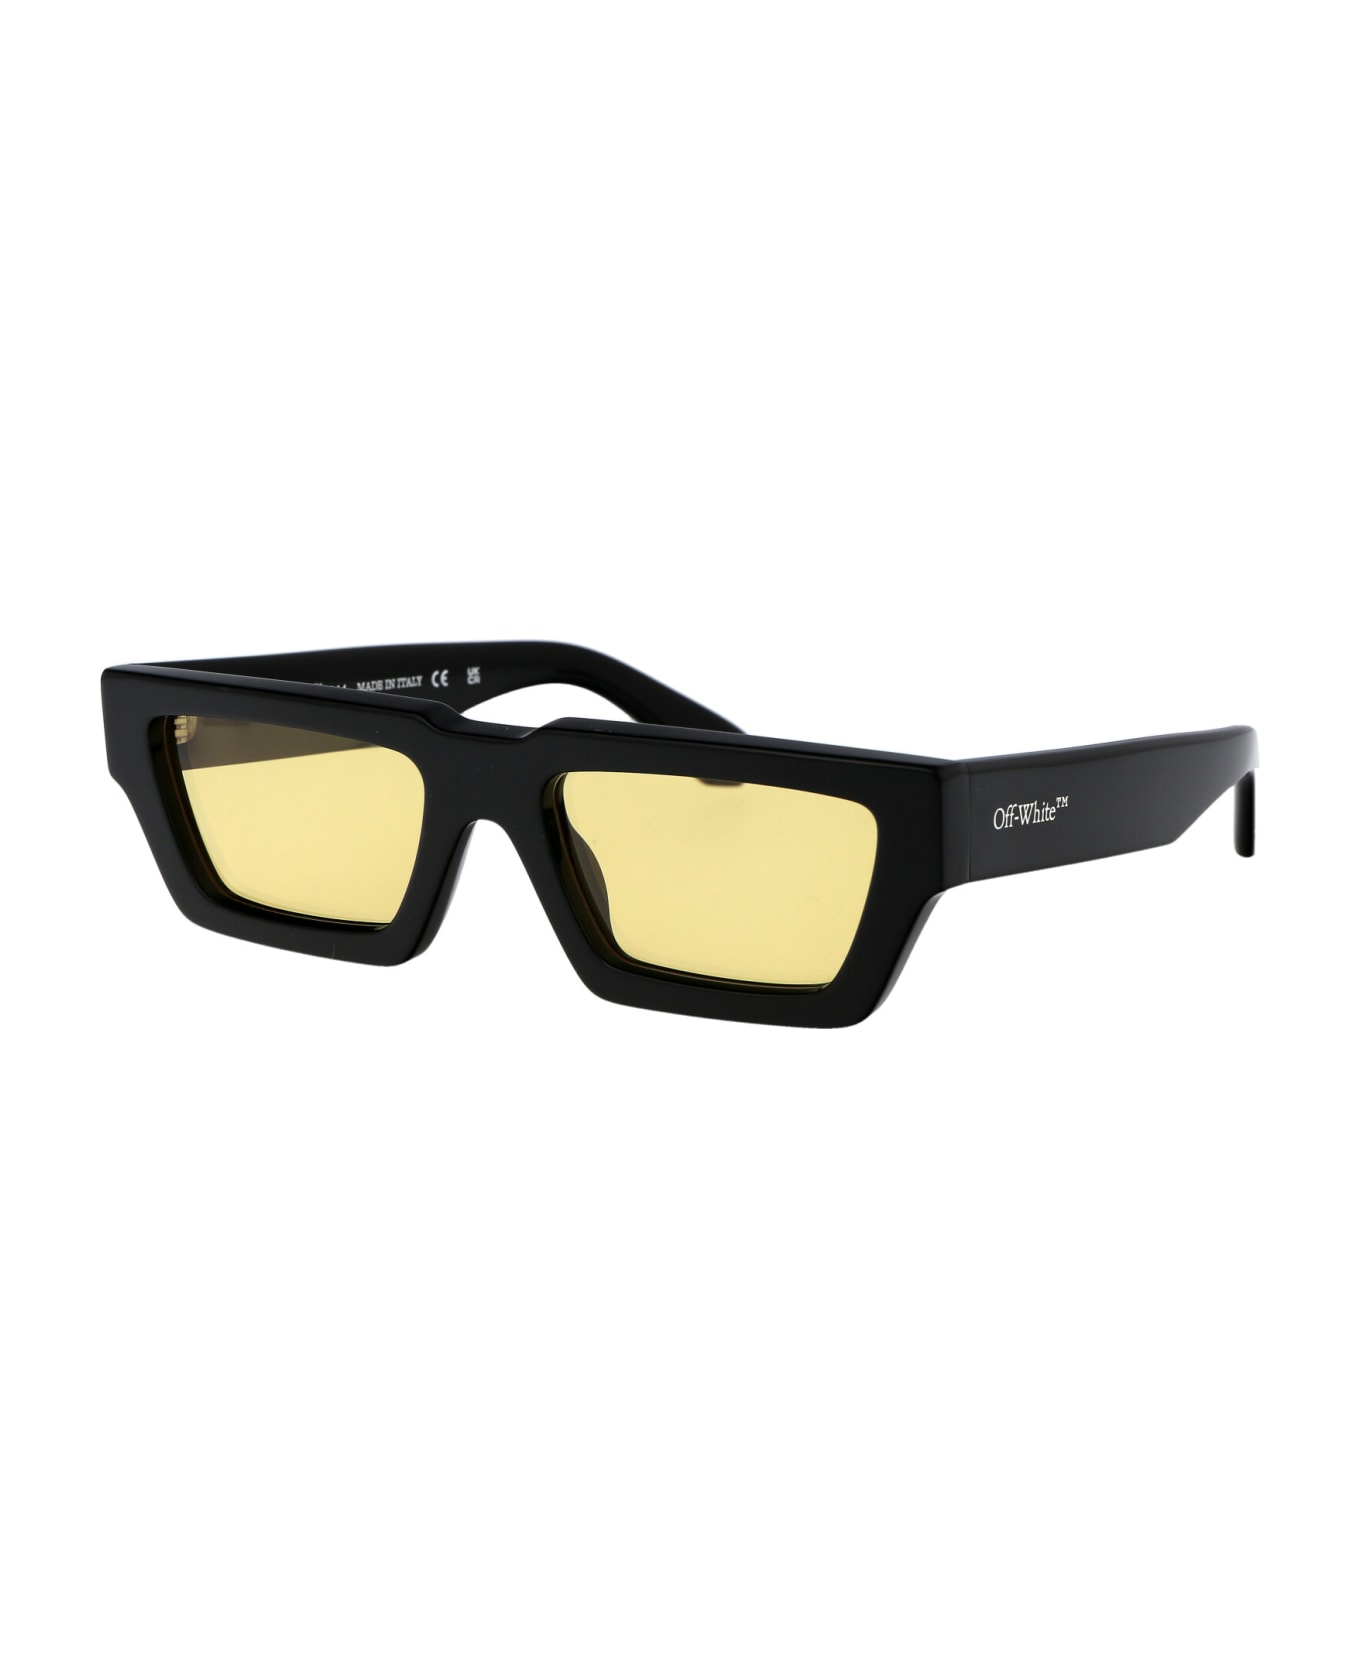 Off-White Manchester Sunglasses - 1018 BLACK